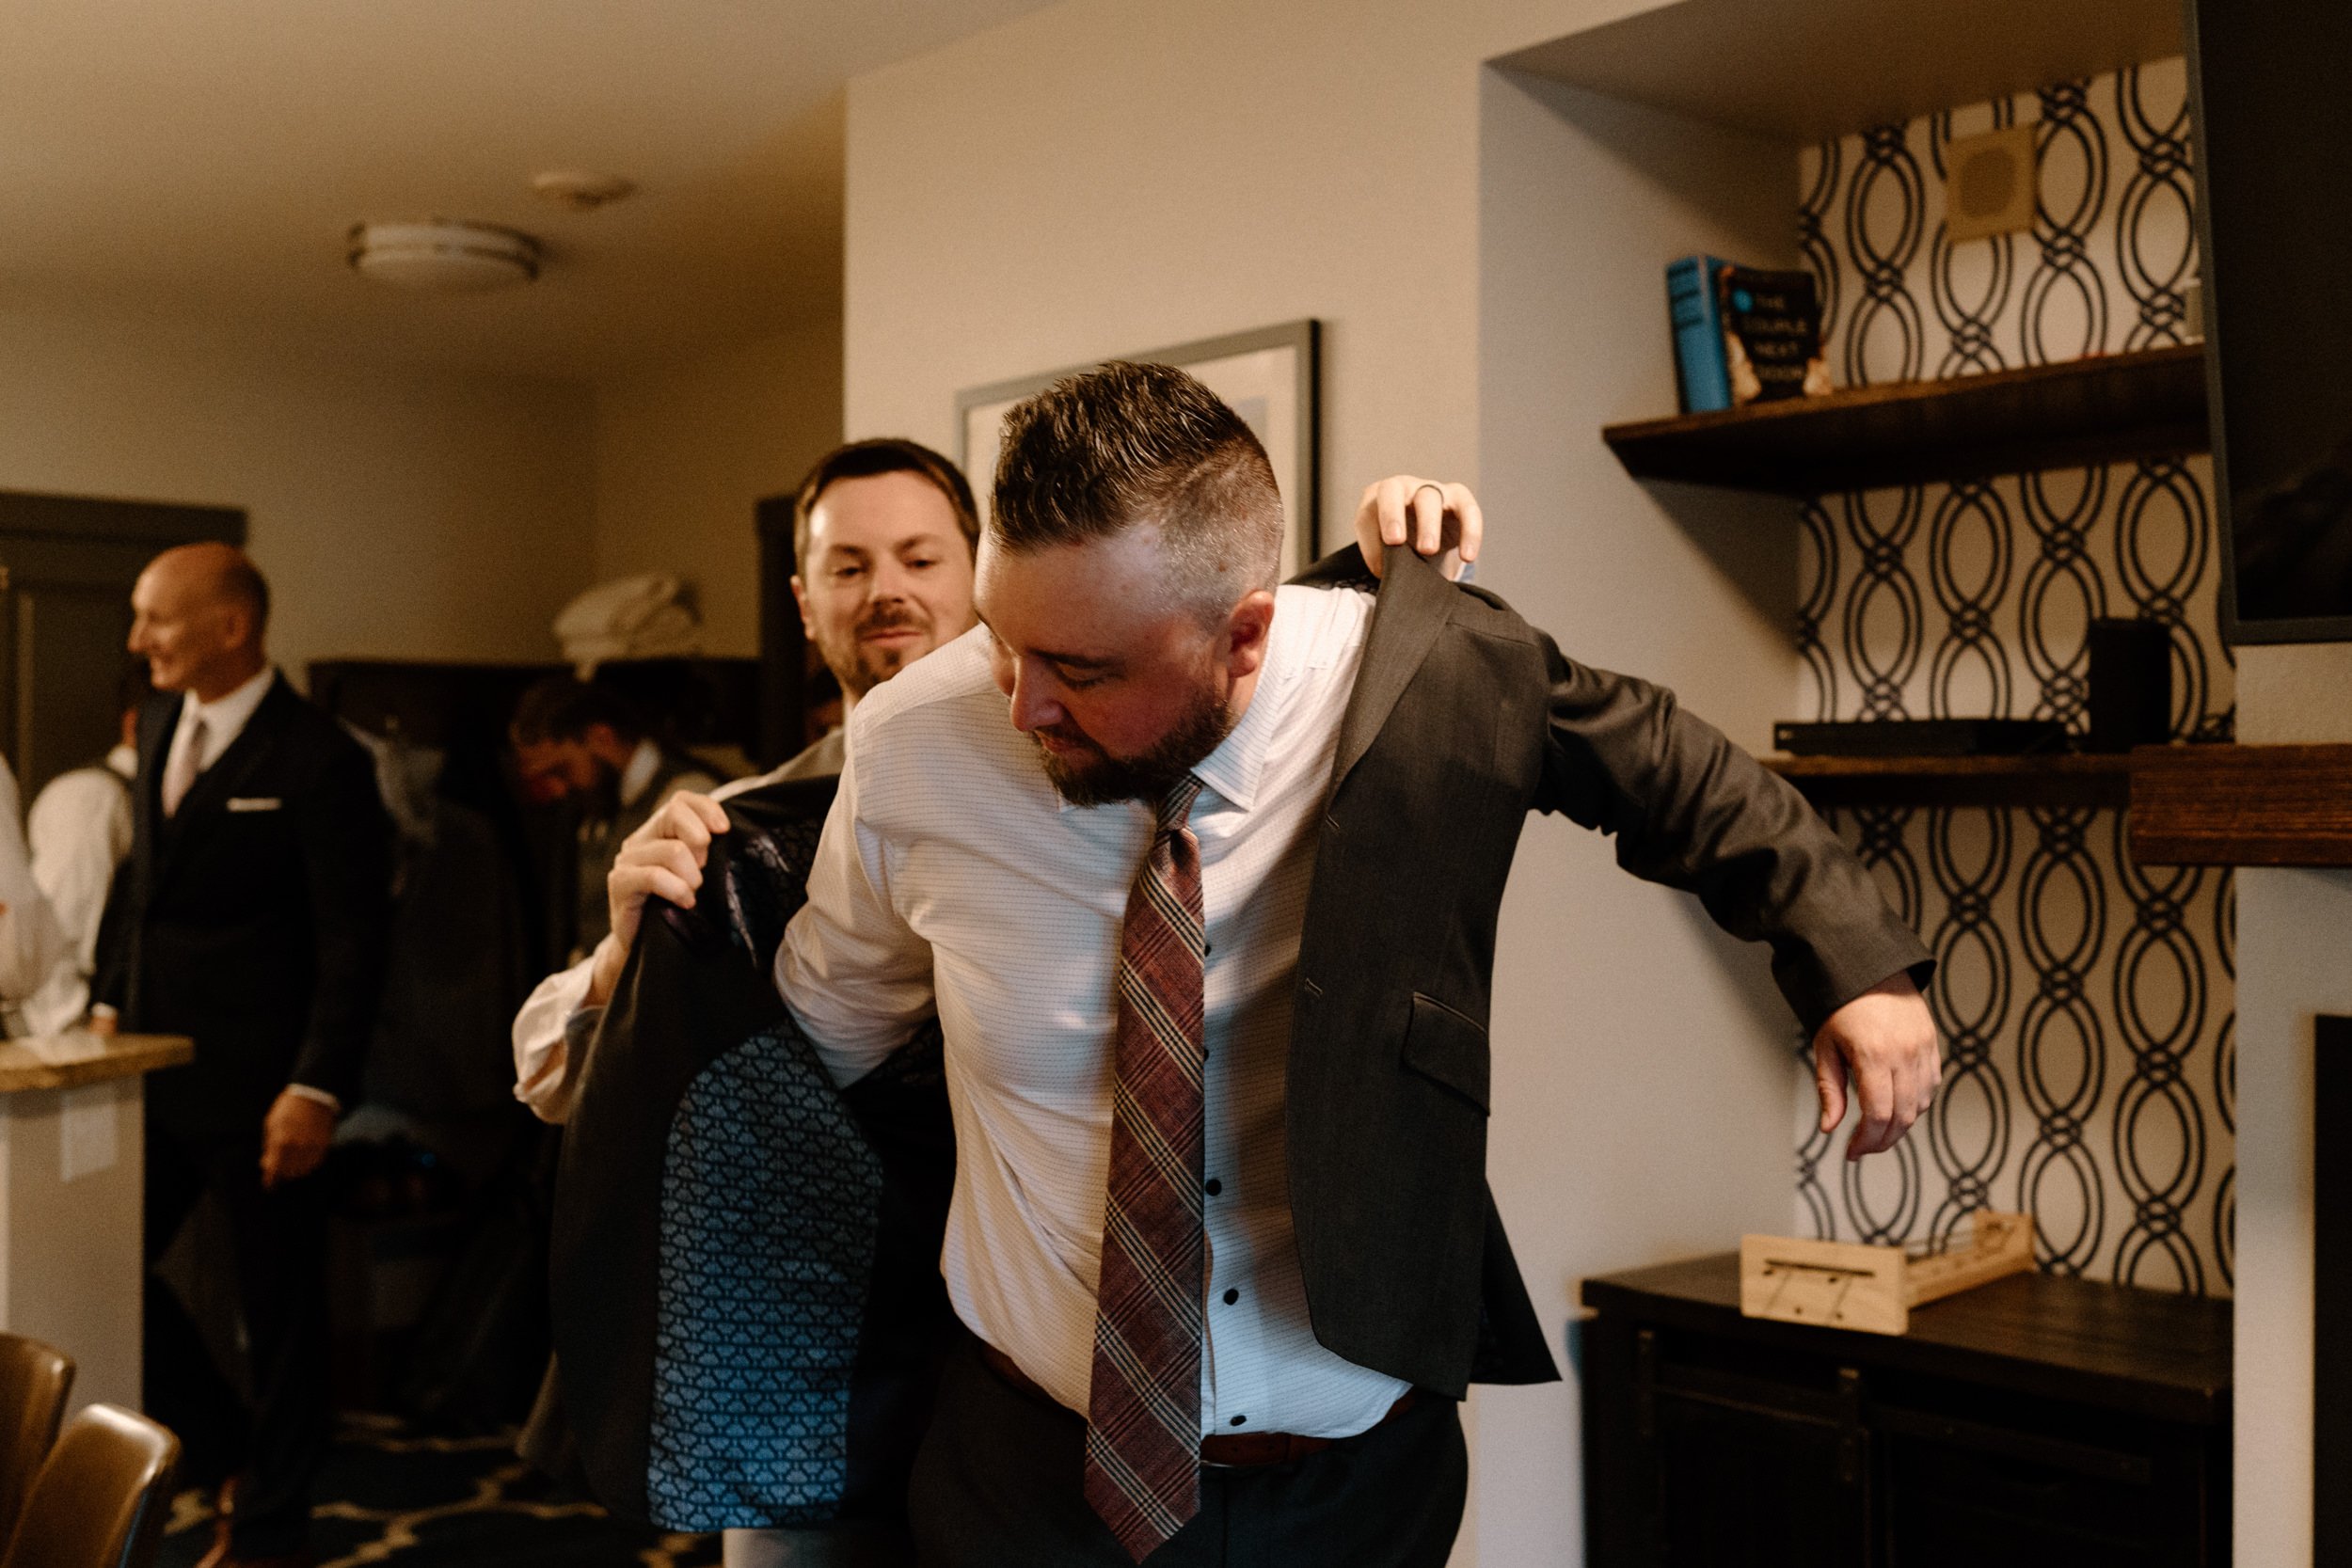 A groomsmen helps the groom into his suit jacket